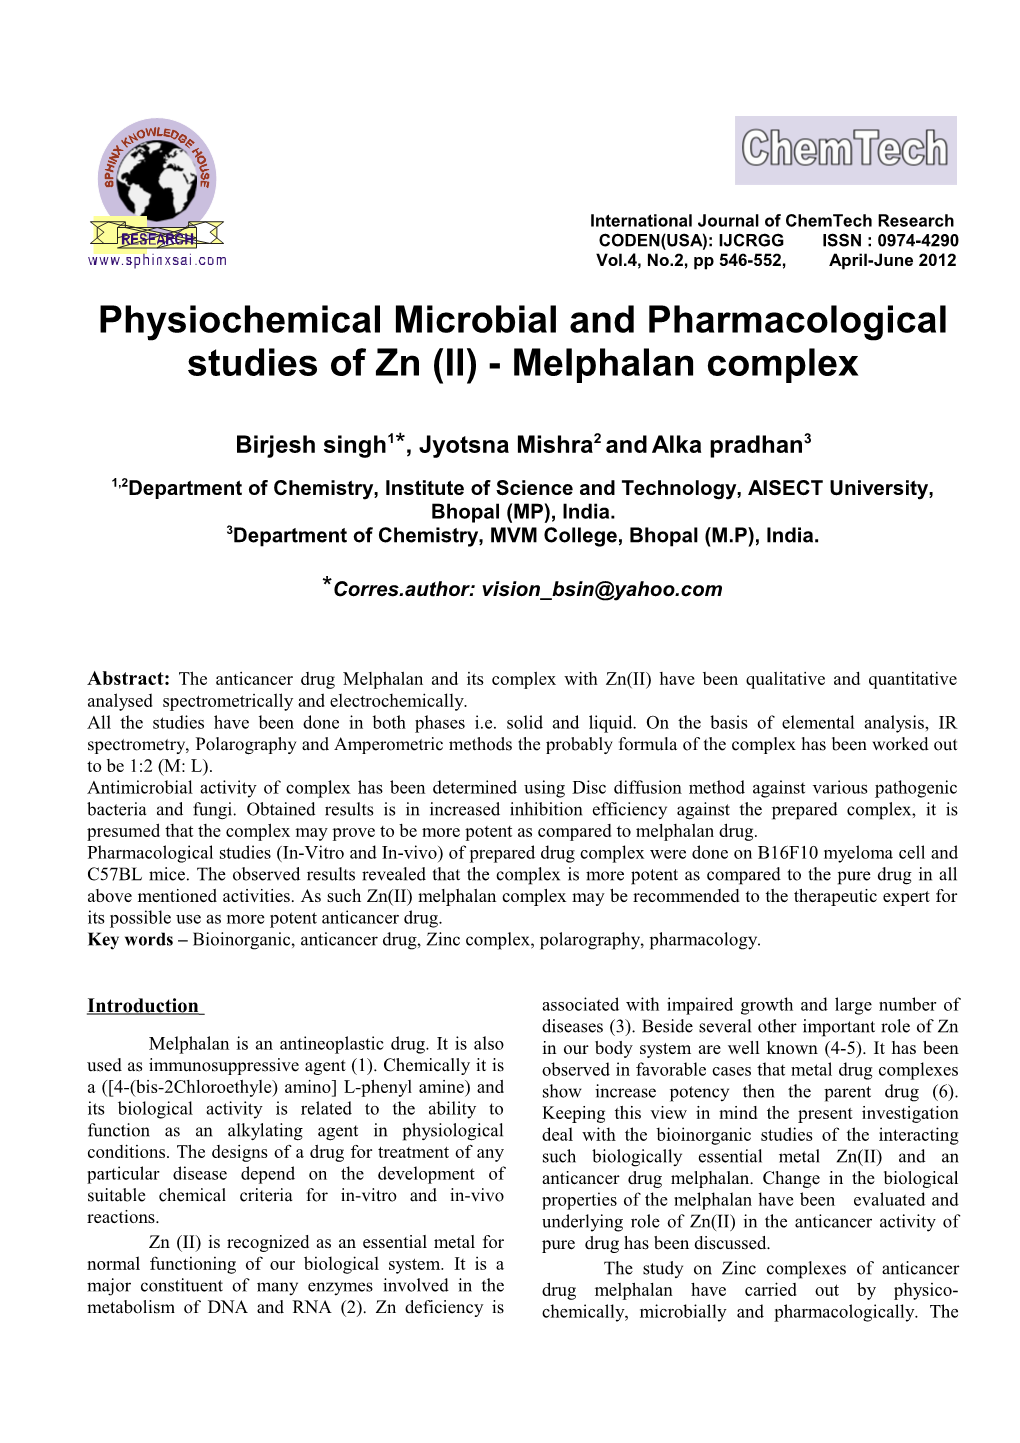 Bioinorganic Studies on Zn (II)- Melphalan Complexes